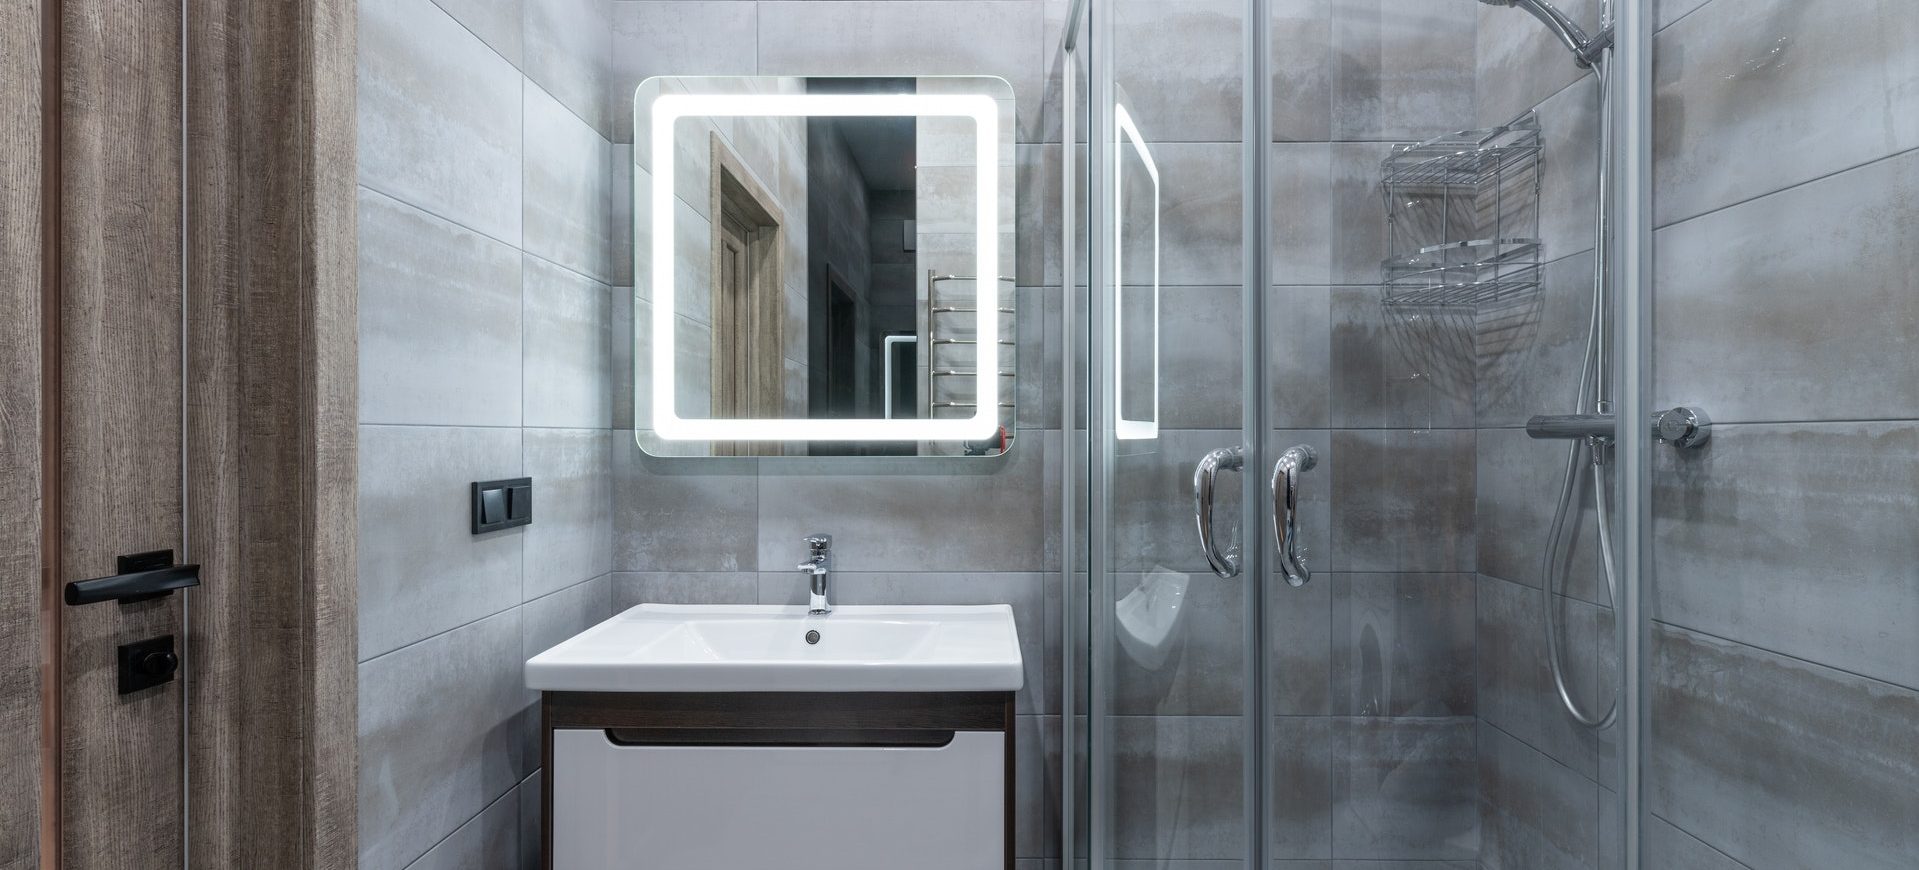 Bathroom Renovation Ideas & Guide